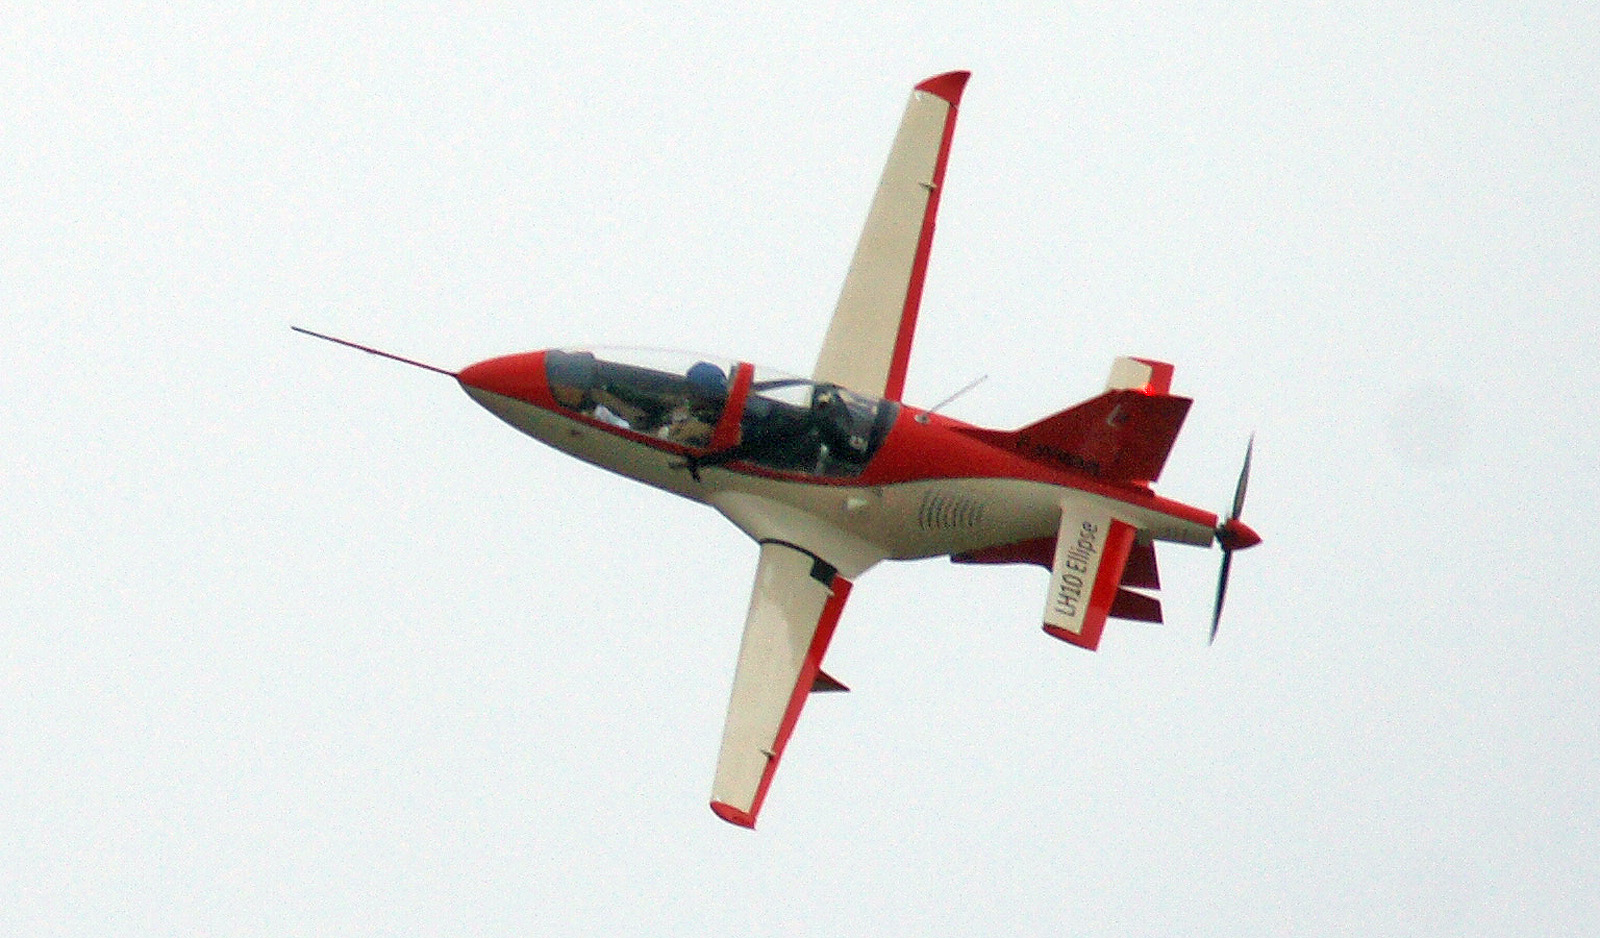 LH-10 Ellipse - самый быстрый самолёт среди двухместных до сотни сил